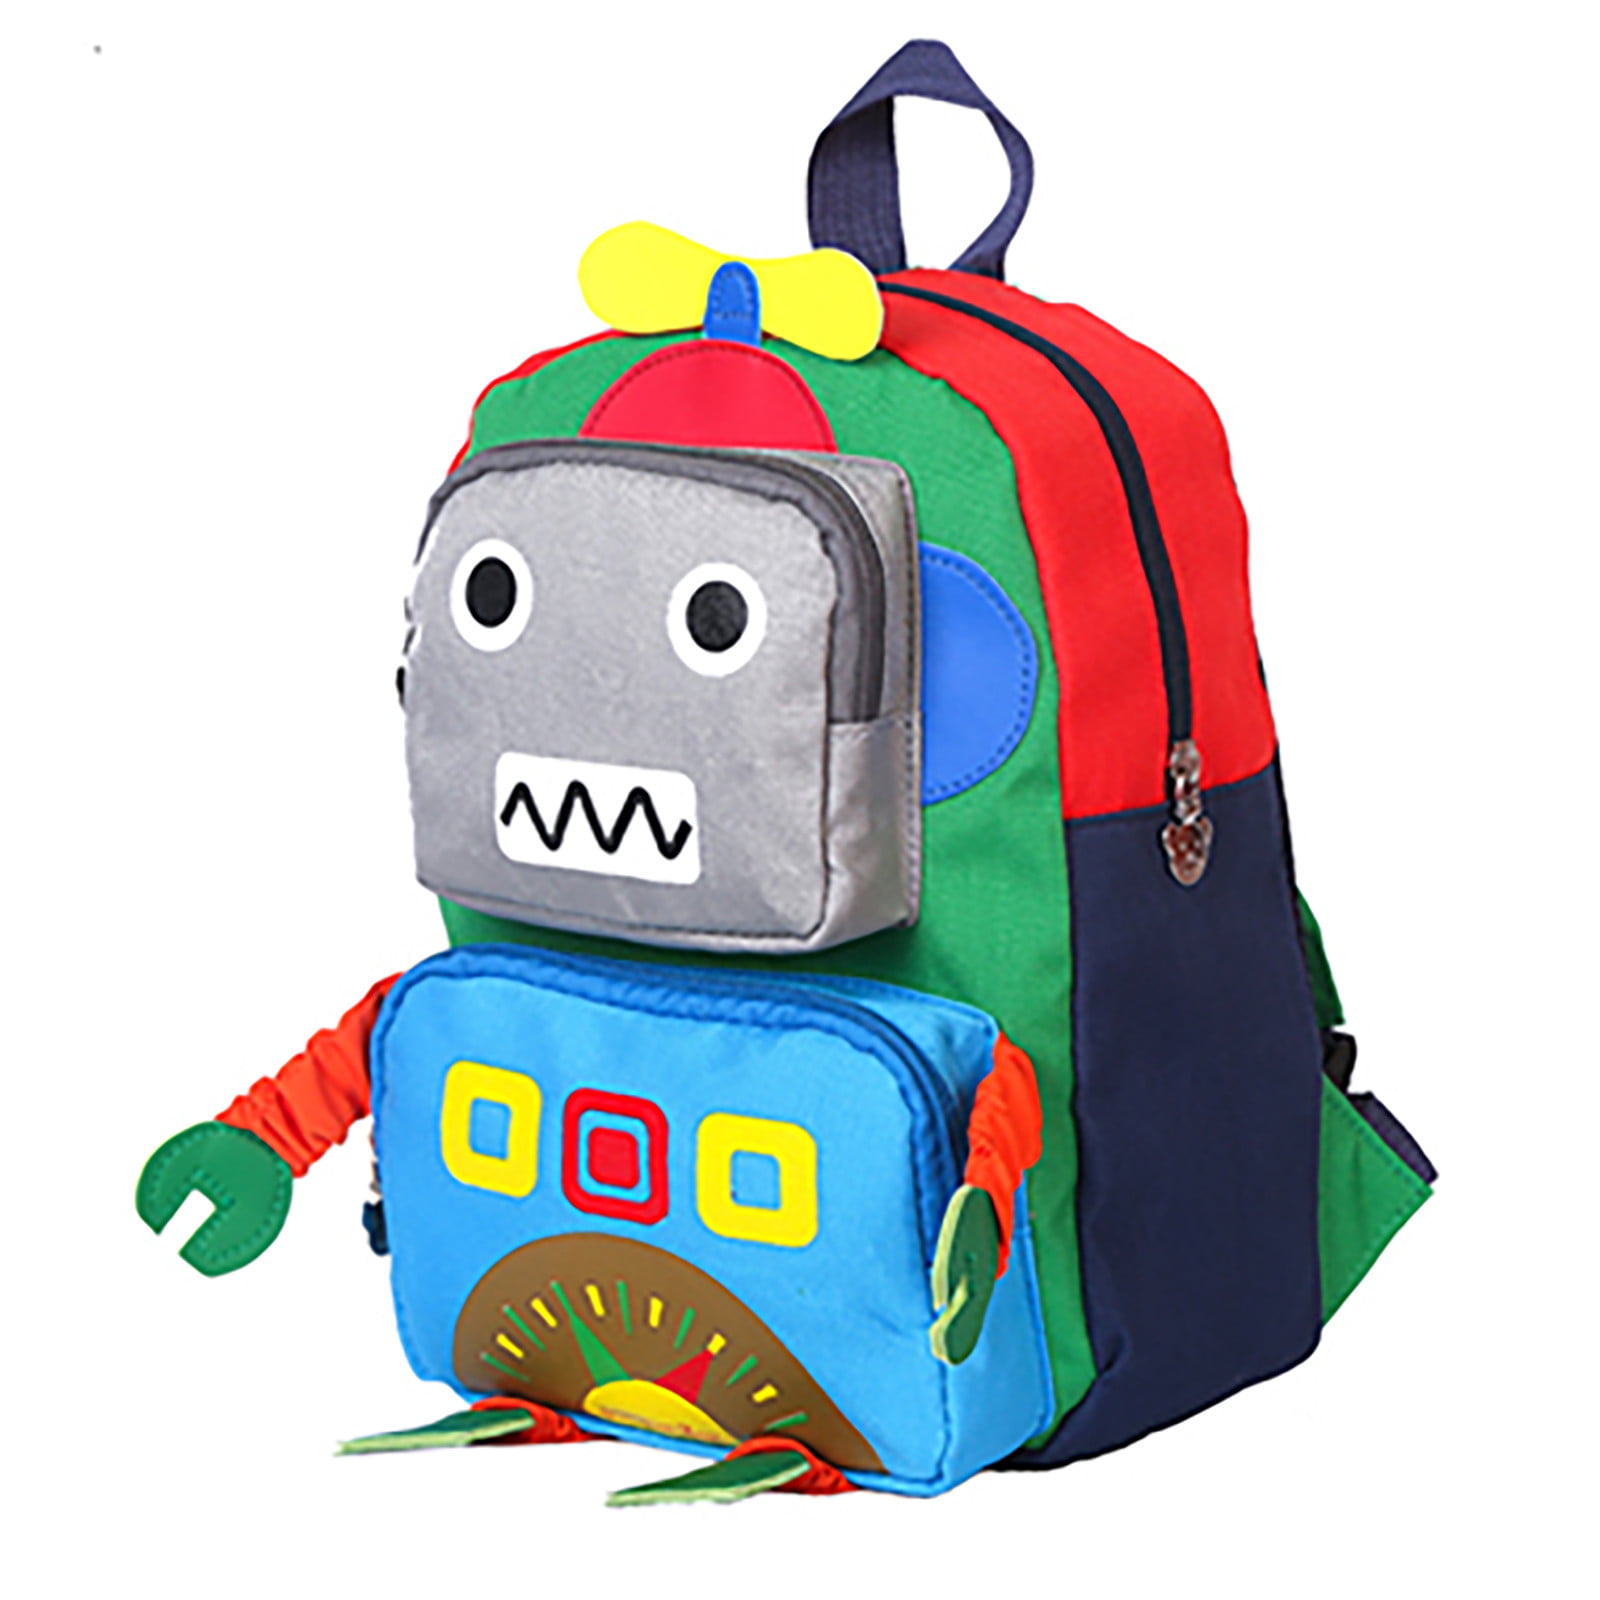 TeMan Children Backpack Kindergarten Cartoon Schoolbag for Kids Robot Backpack Blue